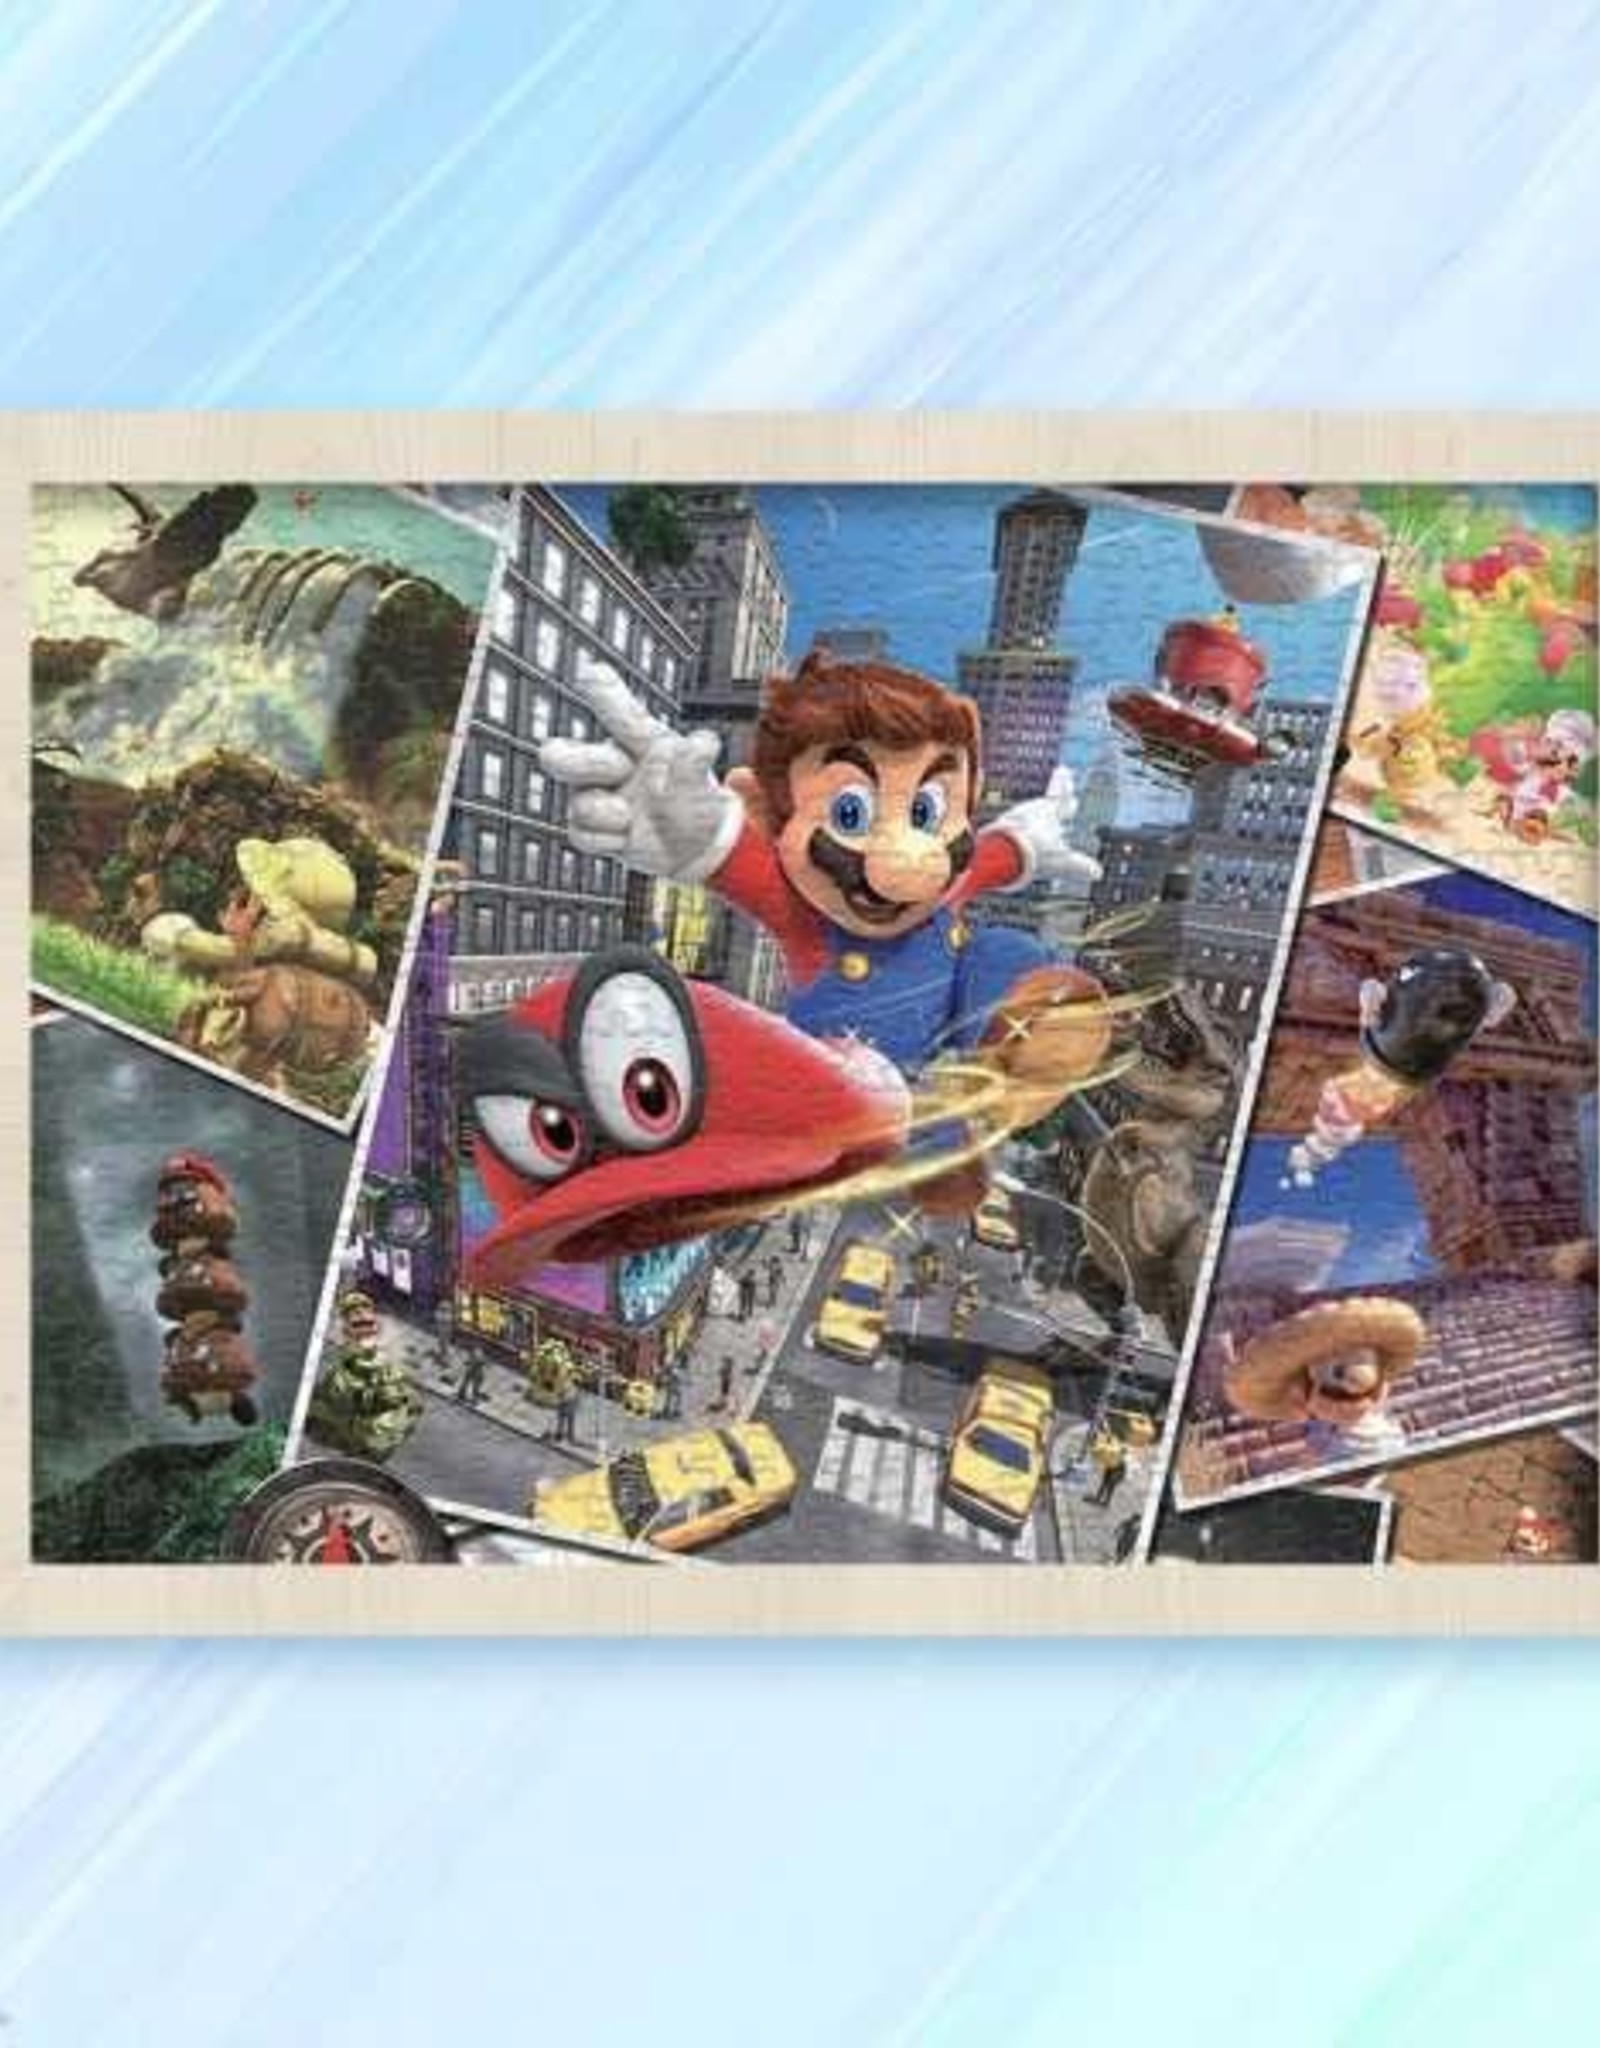 USAopoly Super Mario Odyssey Snapshot Puzzle 1000 PCS